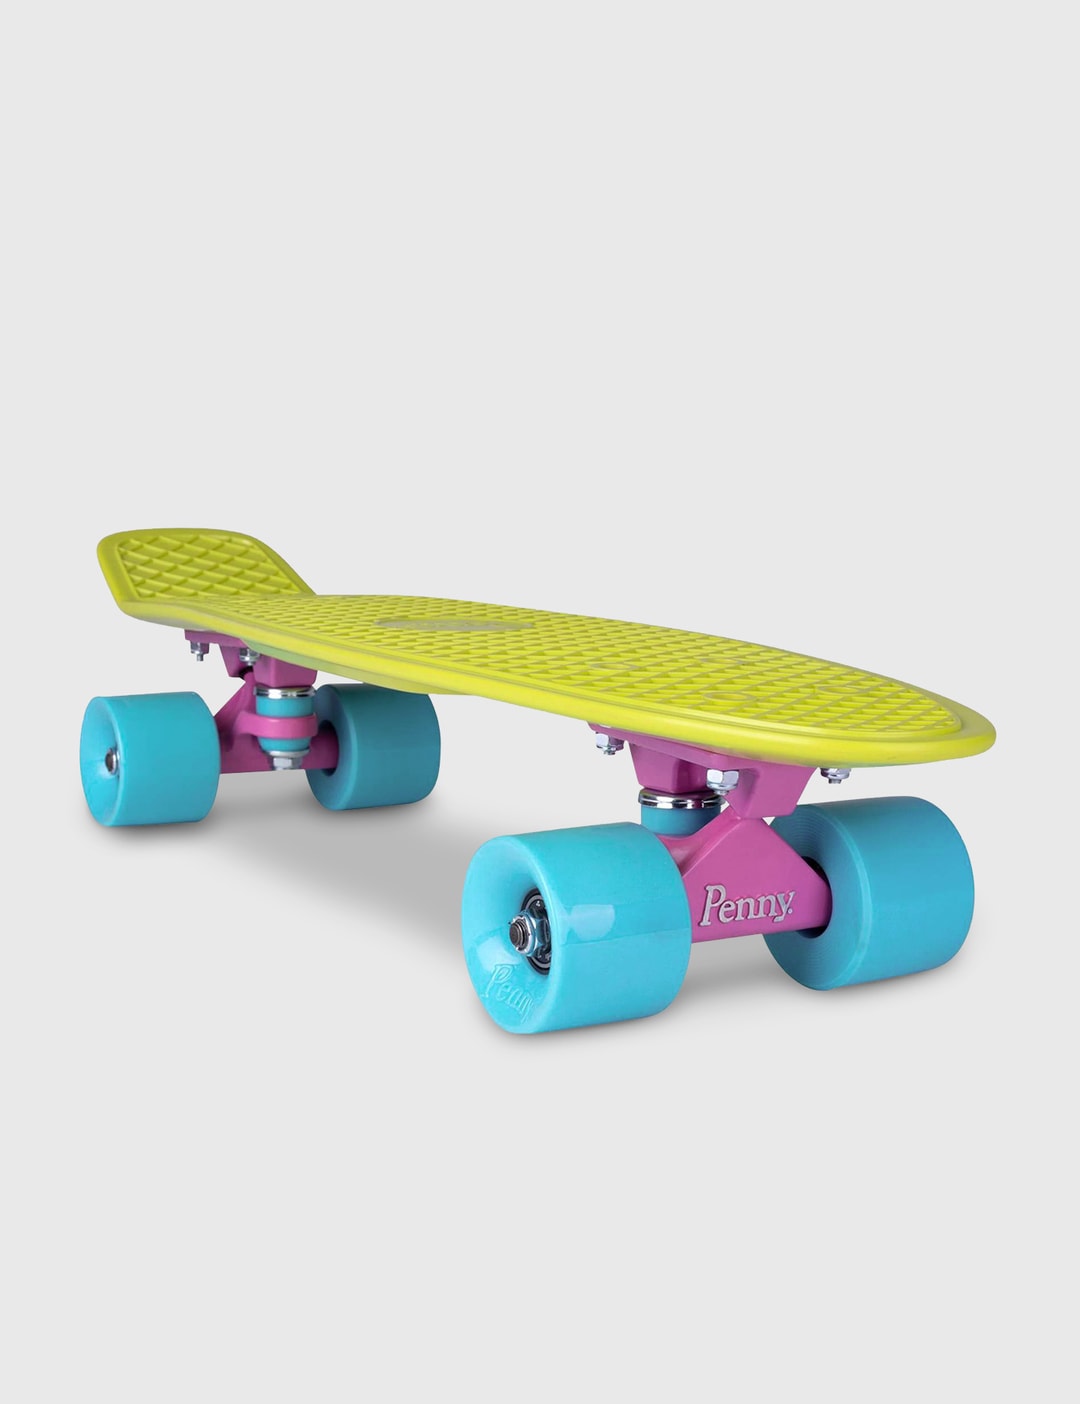 Penny Skateboards - スケートボード 22" | HBX - ハイプビースト(Hypebeast)が厳選したグローバルファッション&ライフスタイル